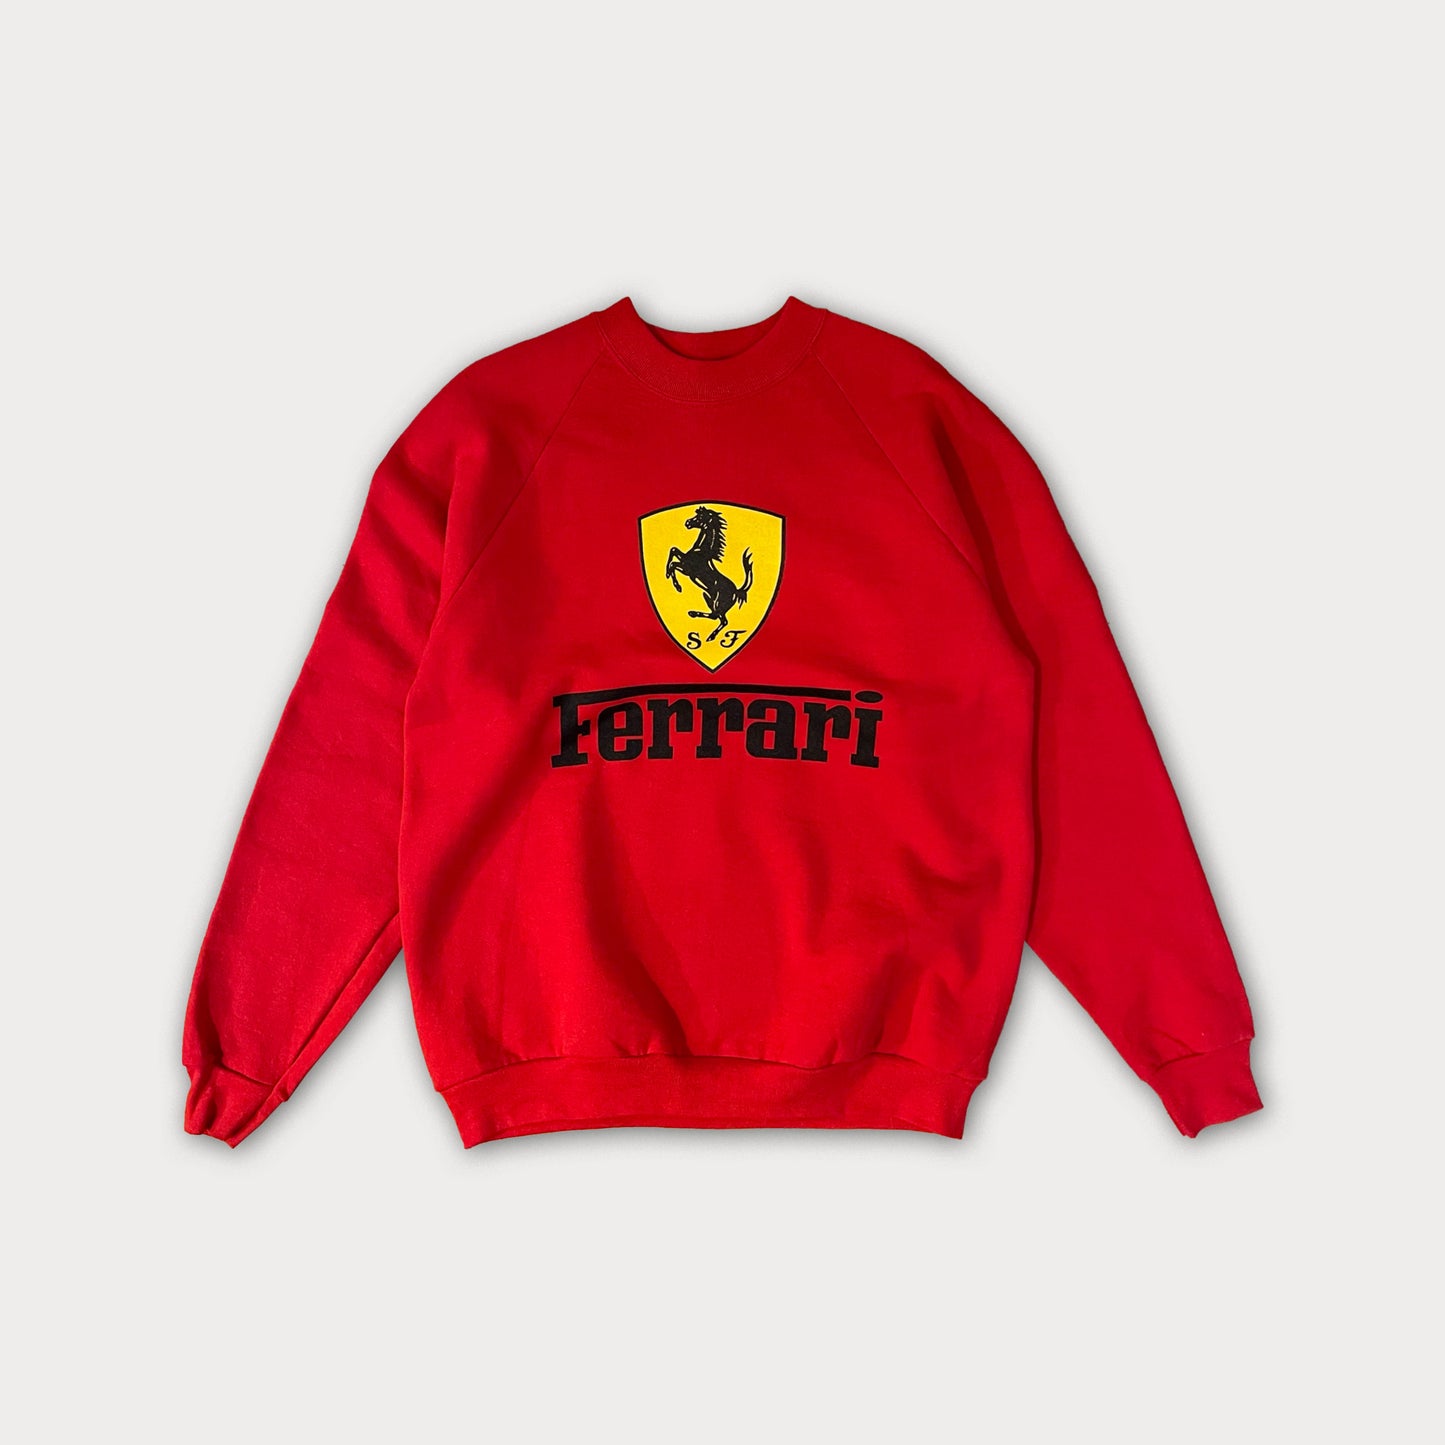 Mid 90’s Ferrari Sweatshirt